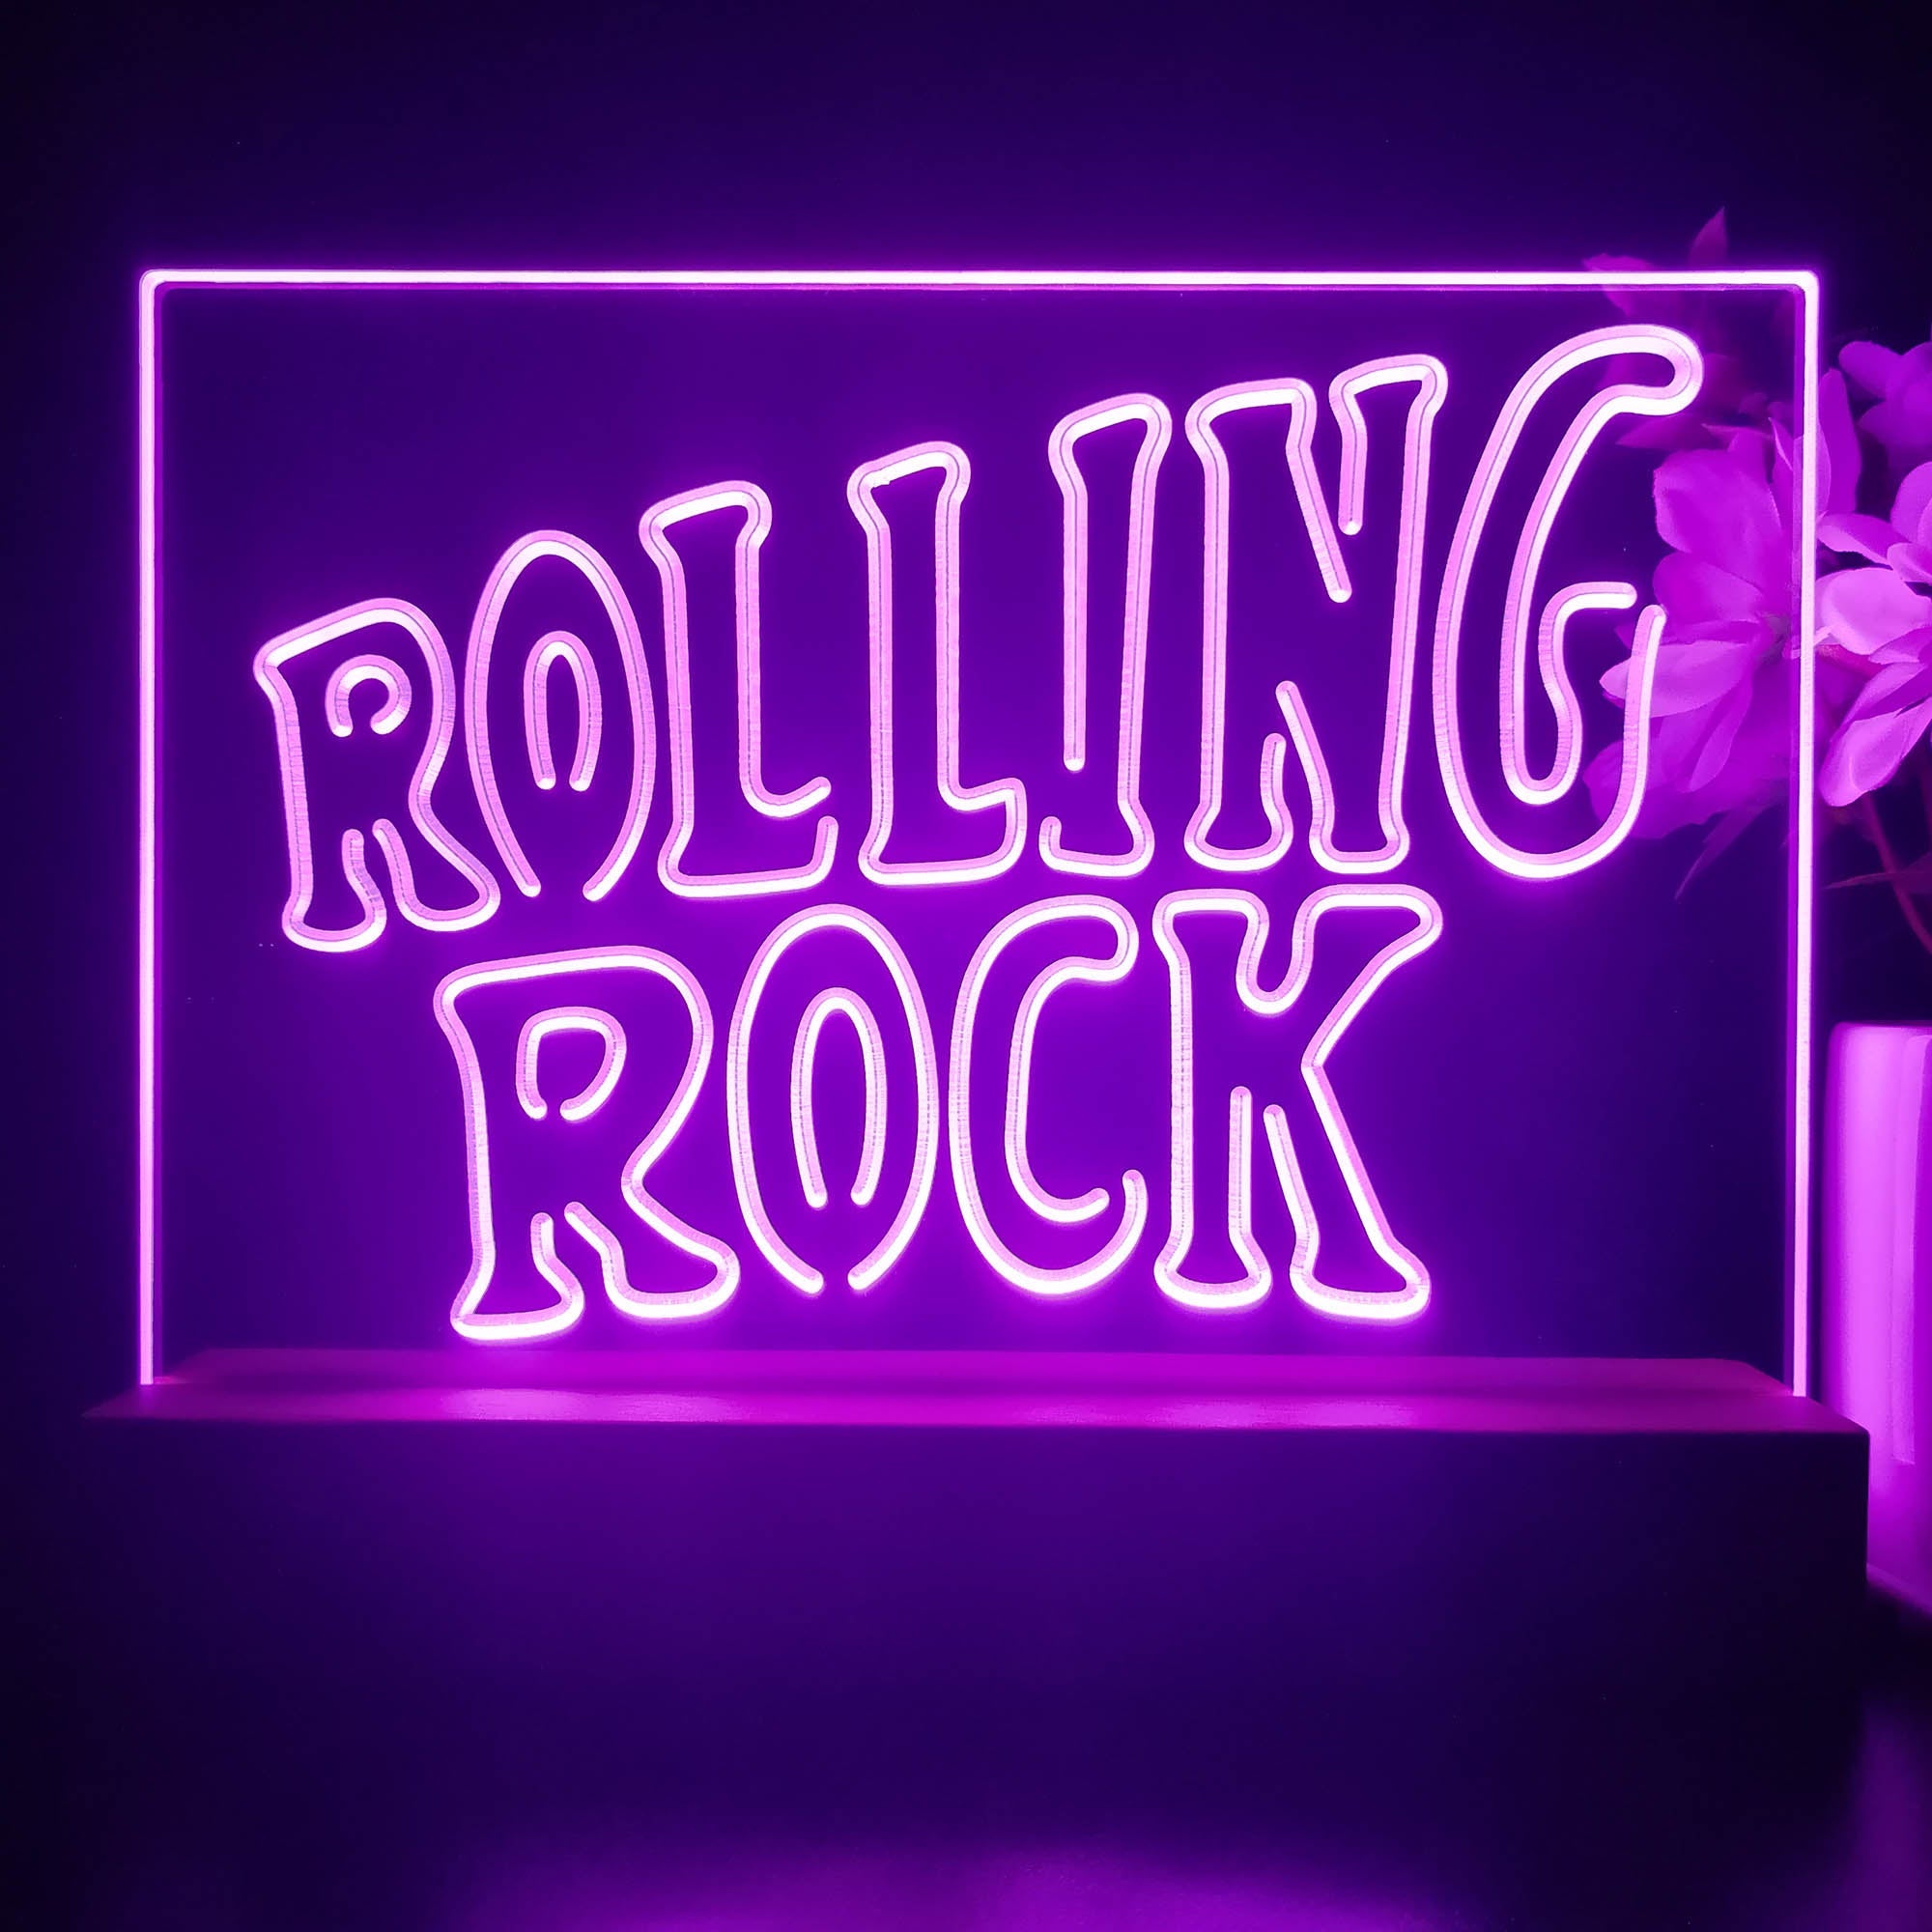 Rolling Rock Music 3D Illusion Night Light Desk Lamp